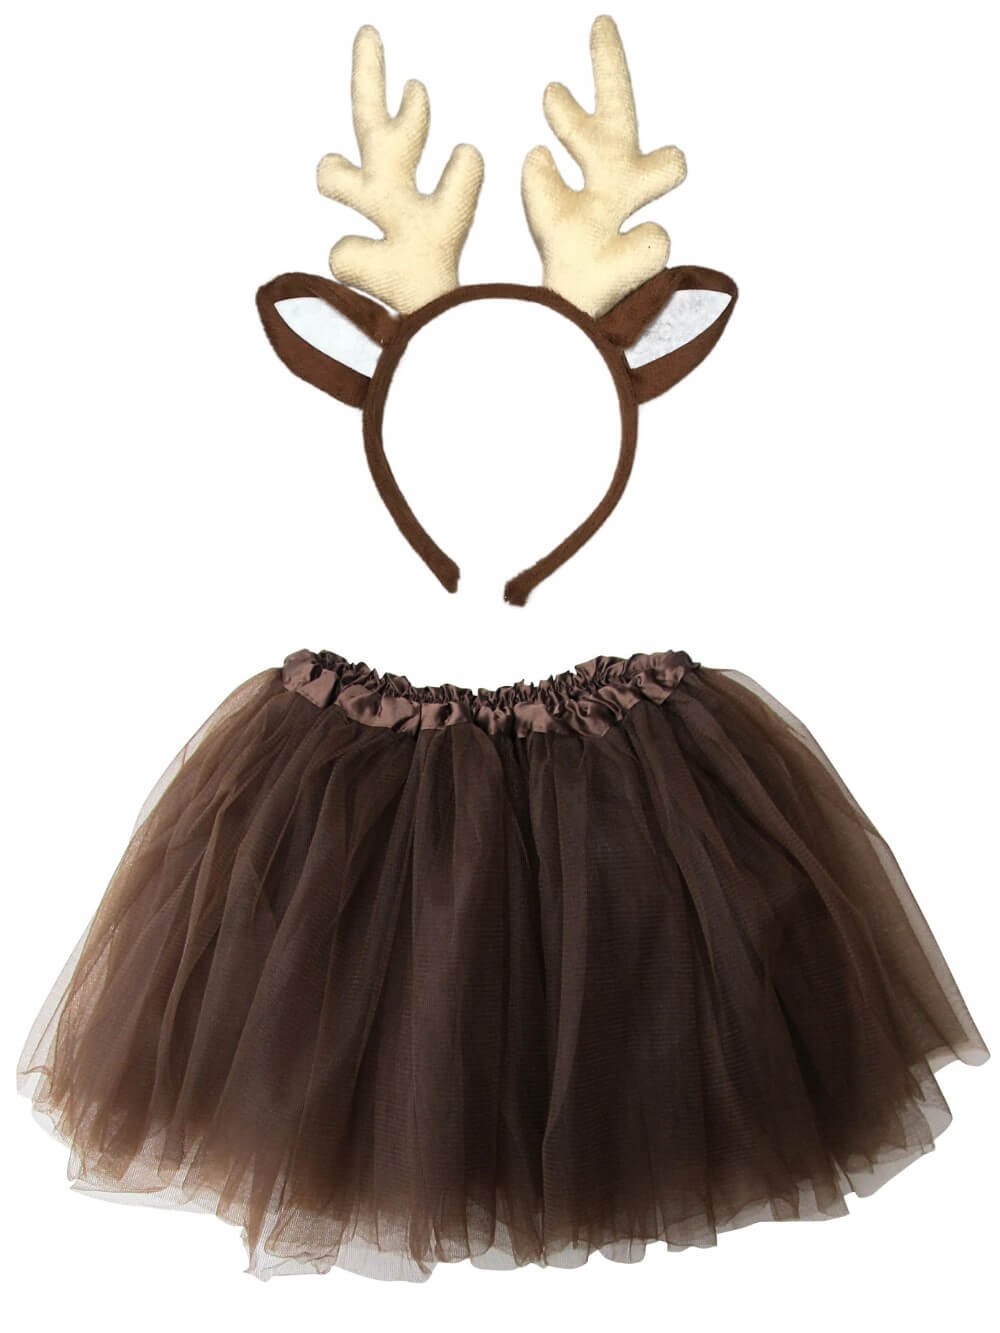 Adult Deer or Reindeer Costume - Tutu Skirt & Antler Headband Set for Adult or Plus Size - Sydney So Sweet